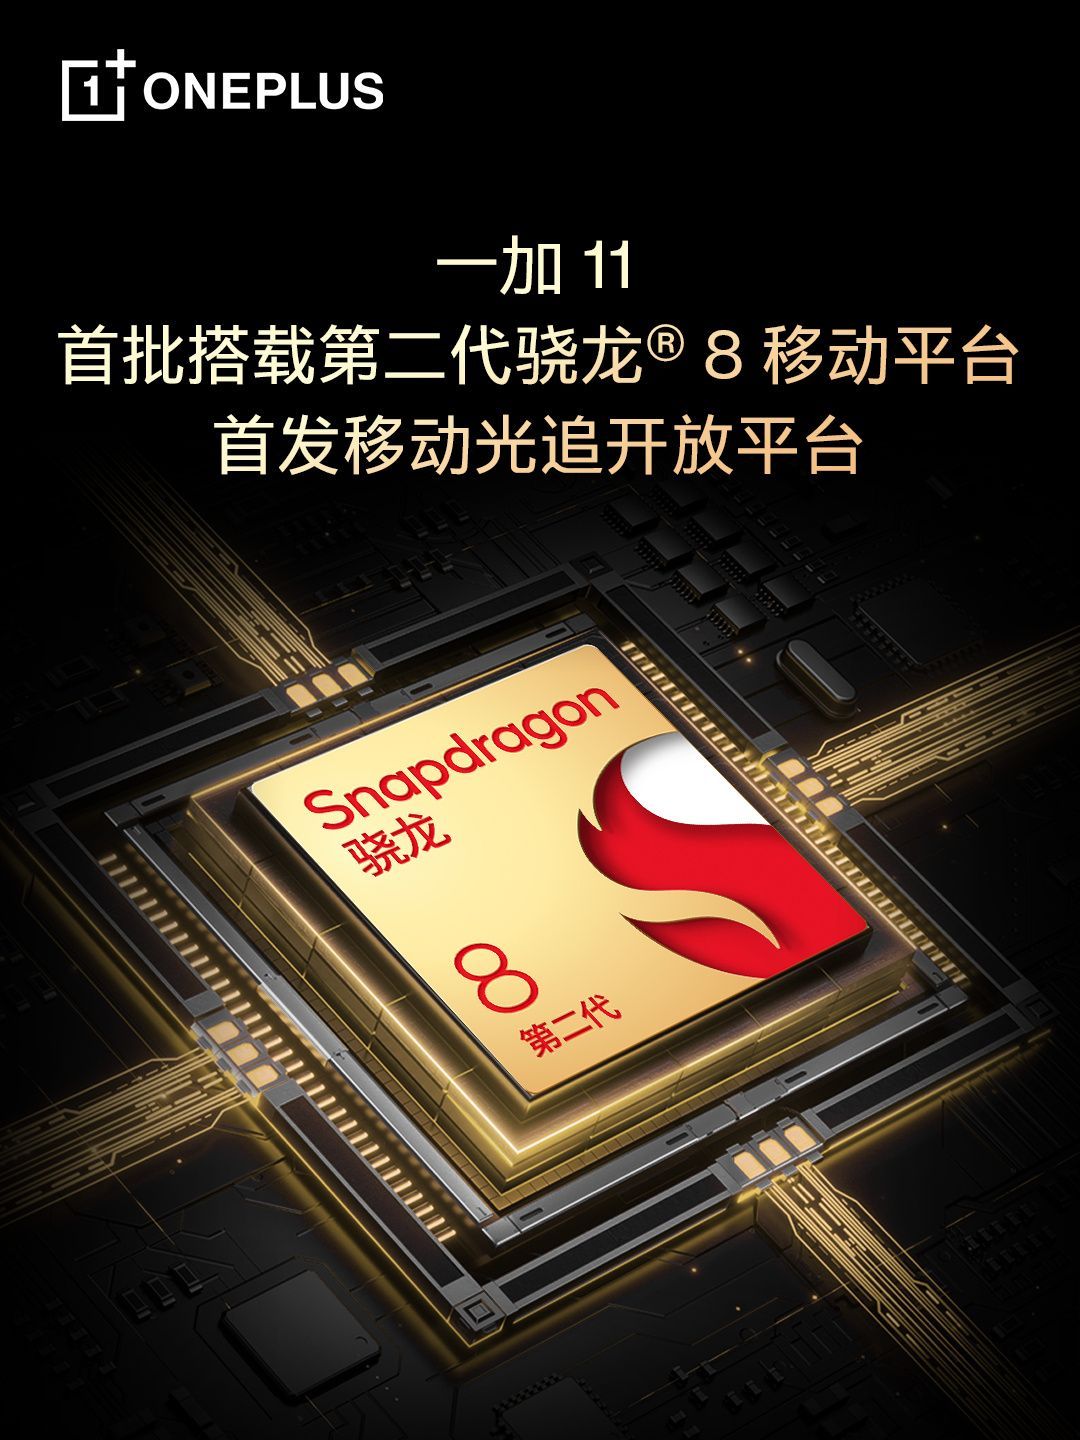 OnePlus-11-Snapdragon-8-Gen-2 Announcement Poster